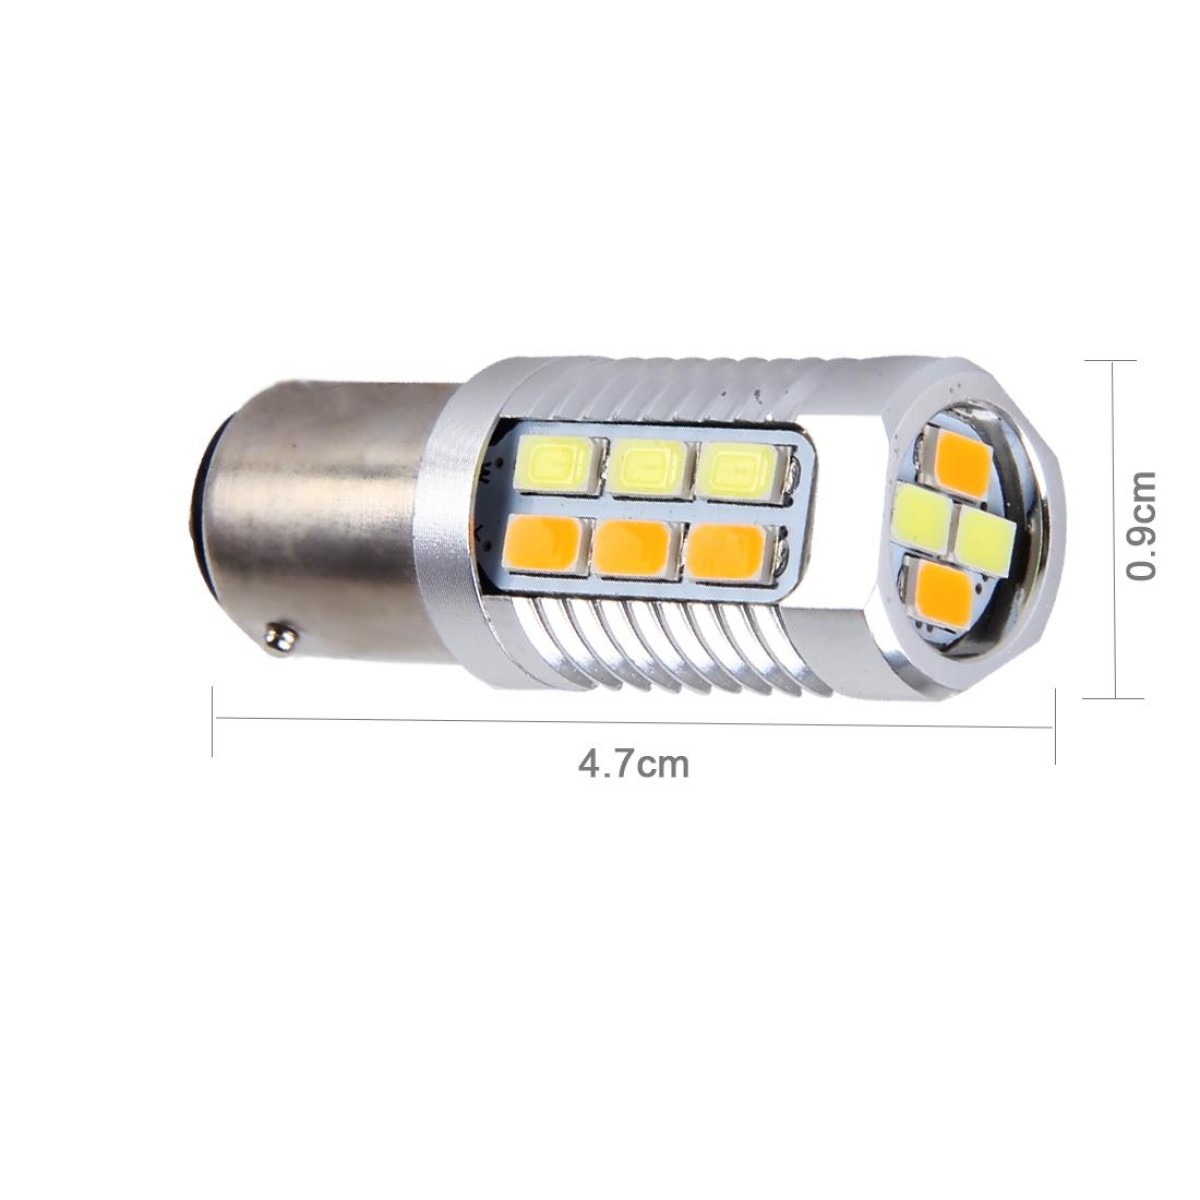 2 PCS 1157/BAY15D 6W 22 SMD-5730-LEDs White + Yellow Light Brake Light Turn Light, DC 12V